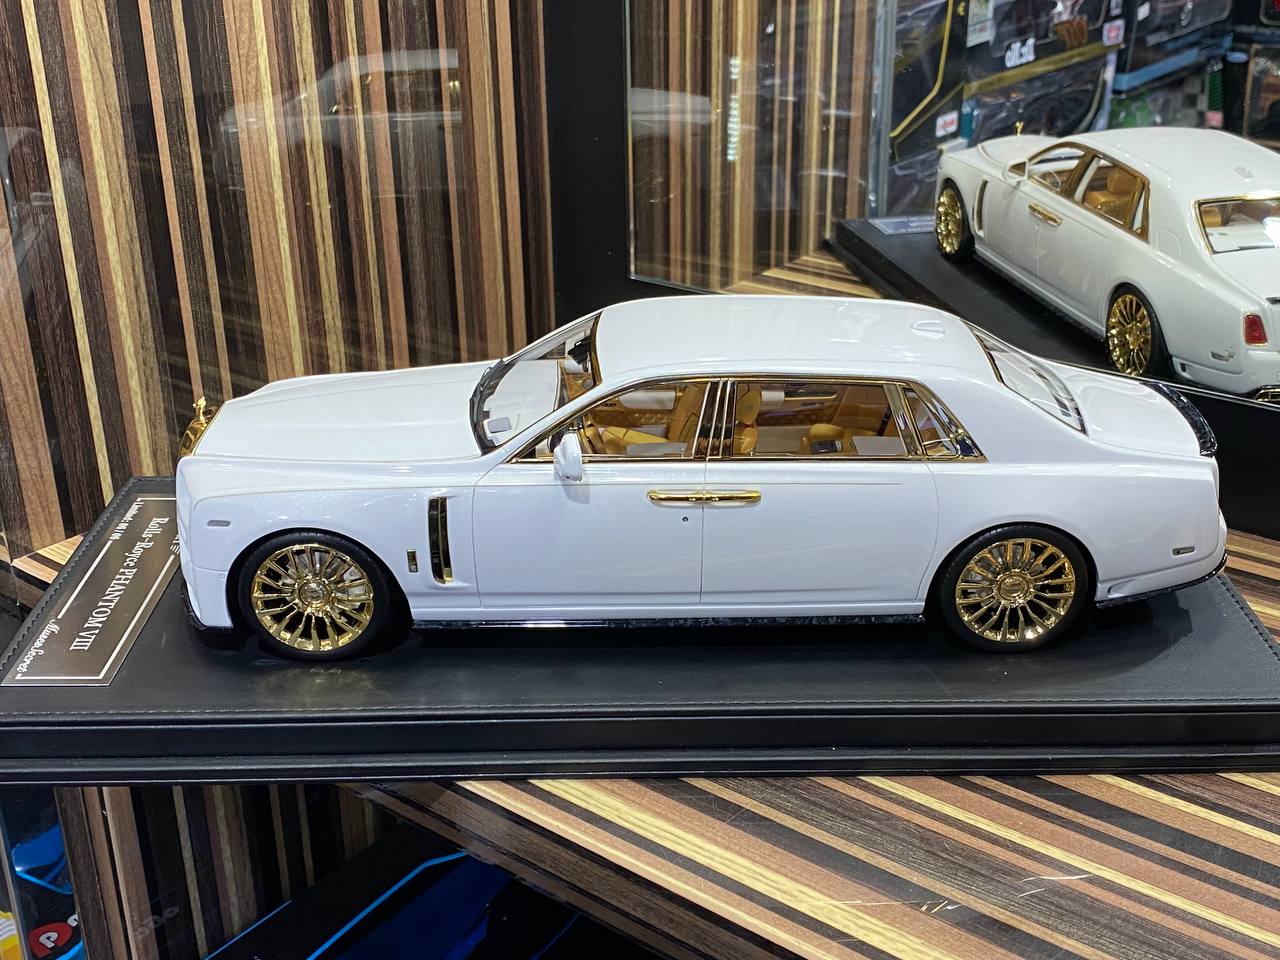 1/18 Resin Muse’s Secret  Rolls Royce- PHANTOM VIII Mansory Pearl White and Gold Scale Model Car|Sold in Dturman.com Dubai UAE.